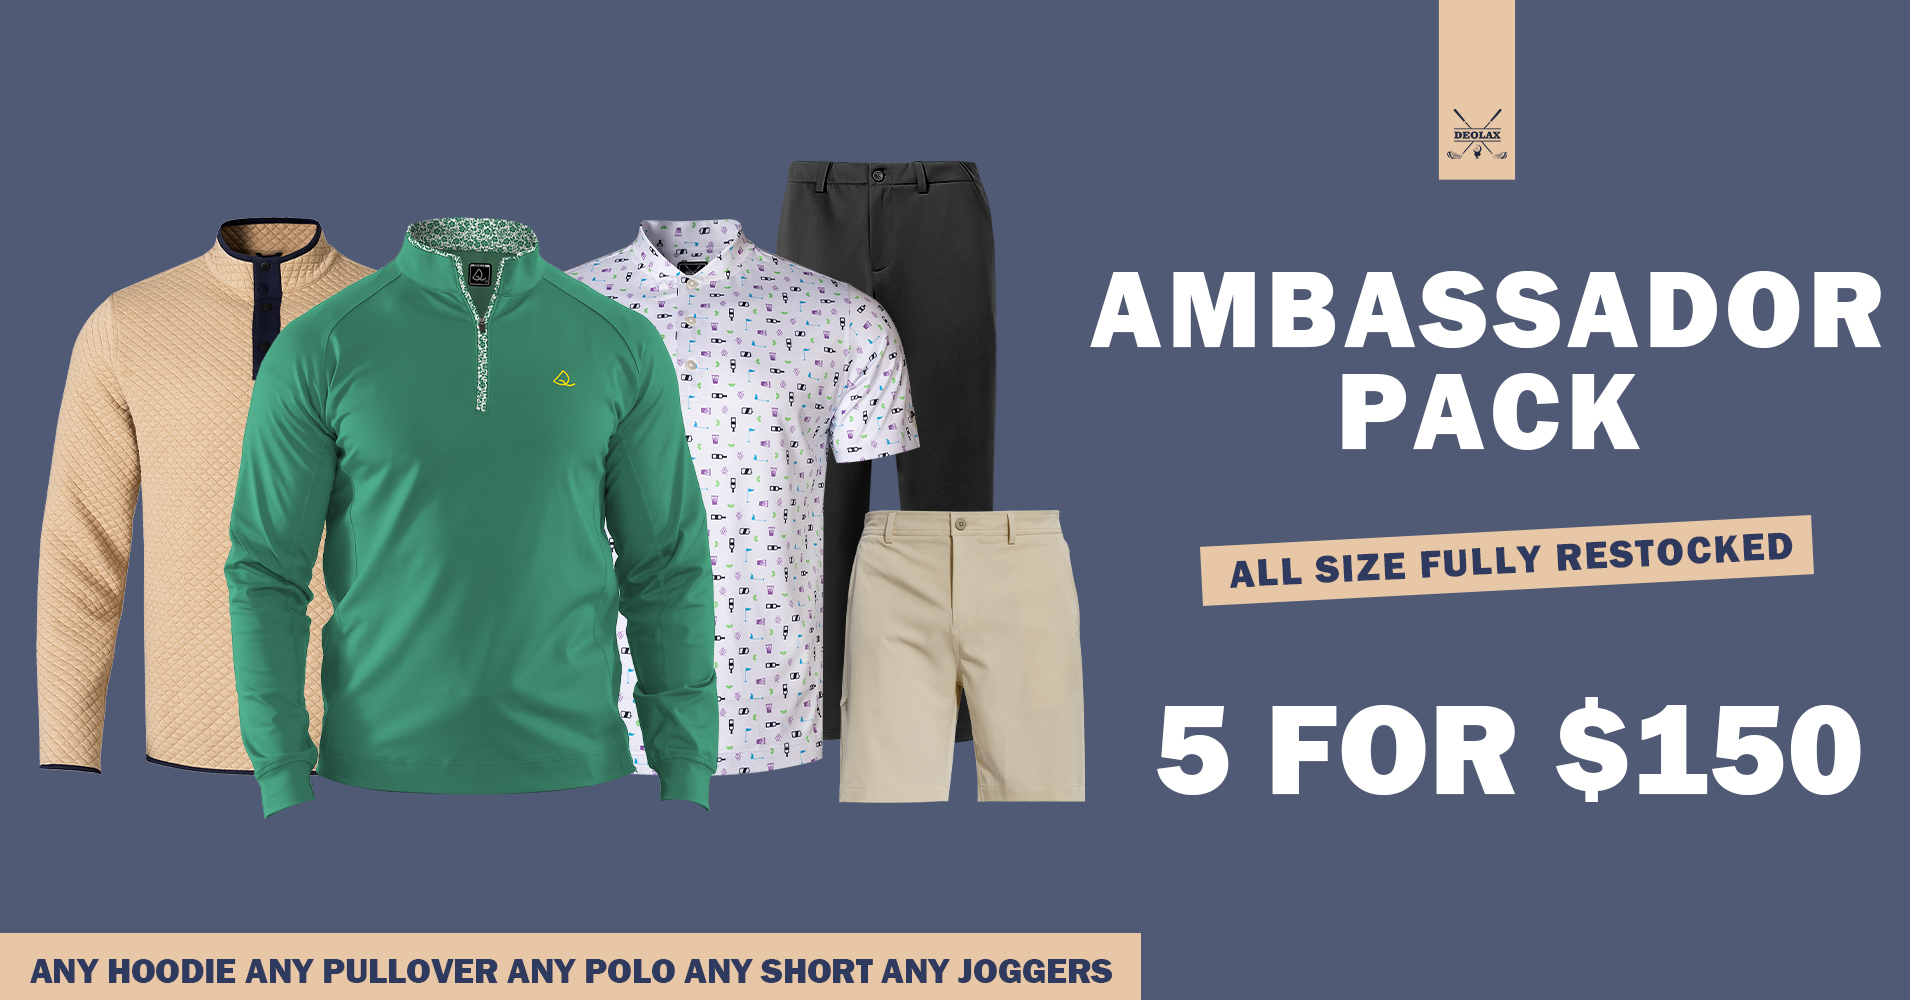 Golf apparel ambassador pack by Deolax